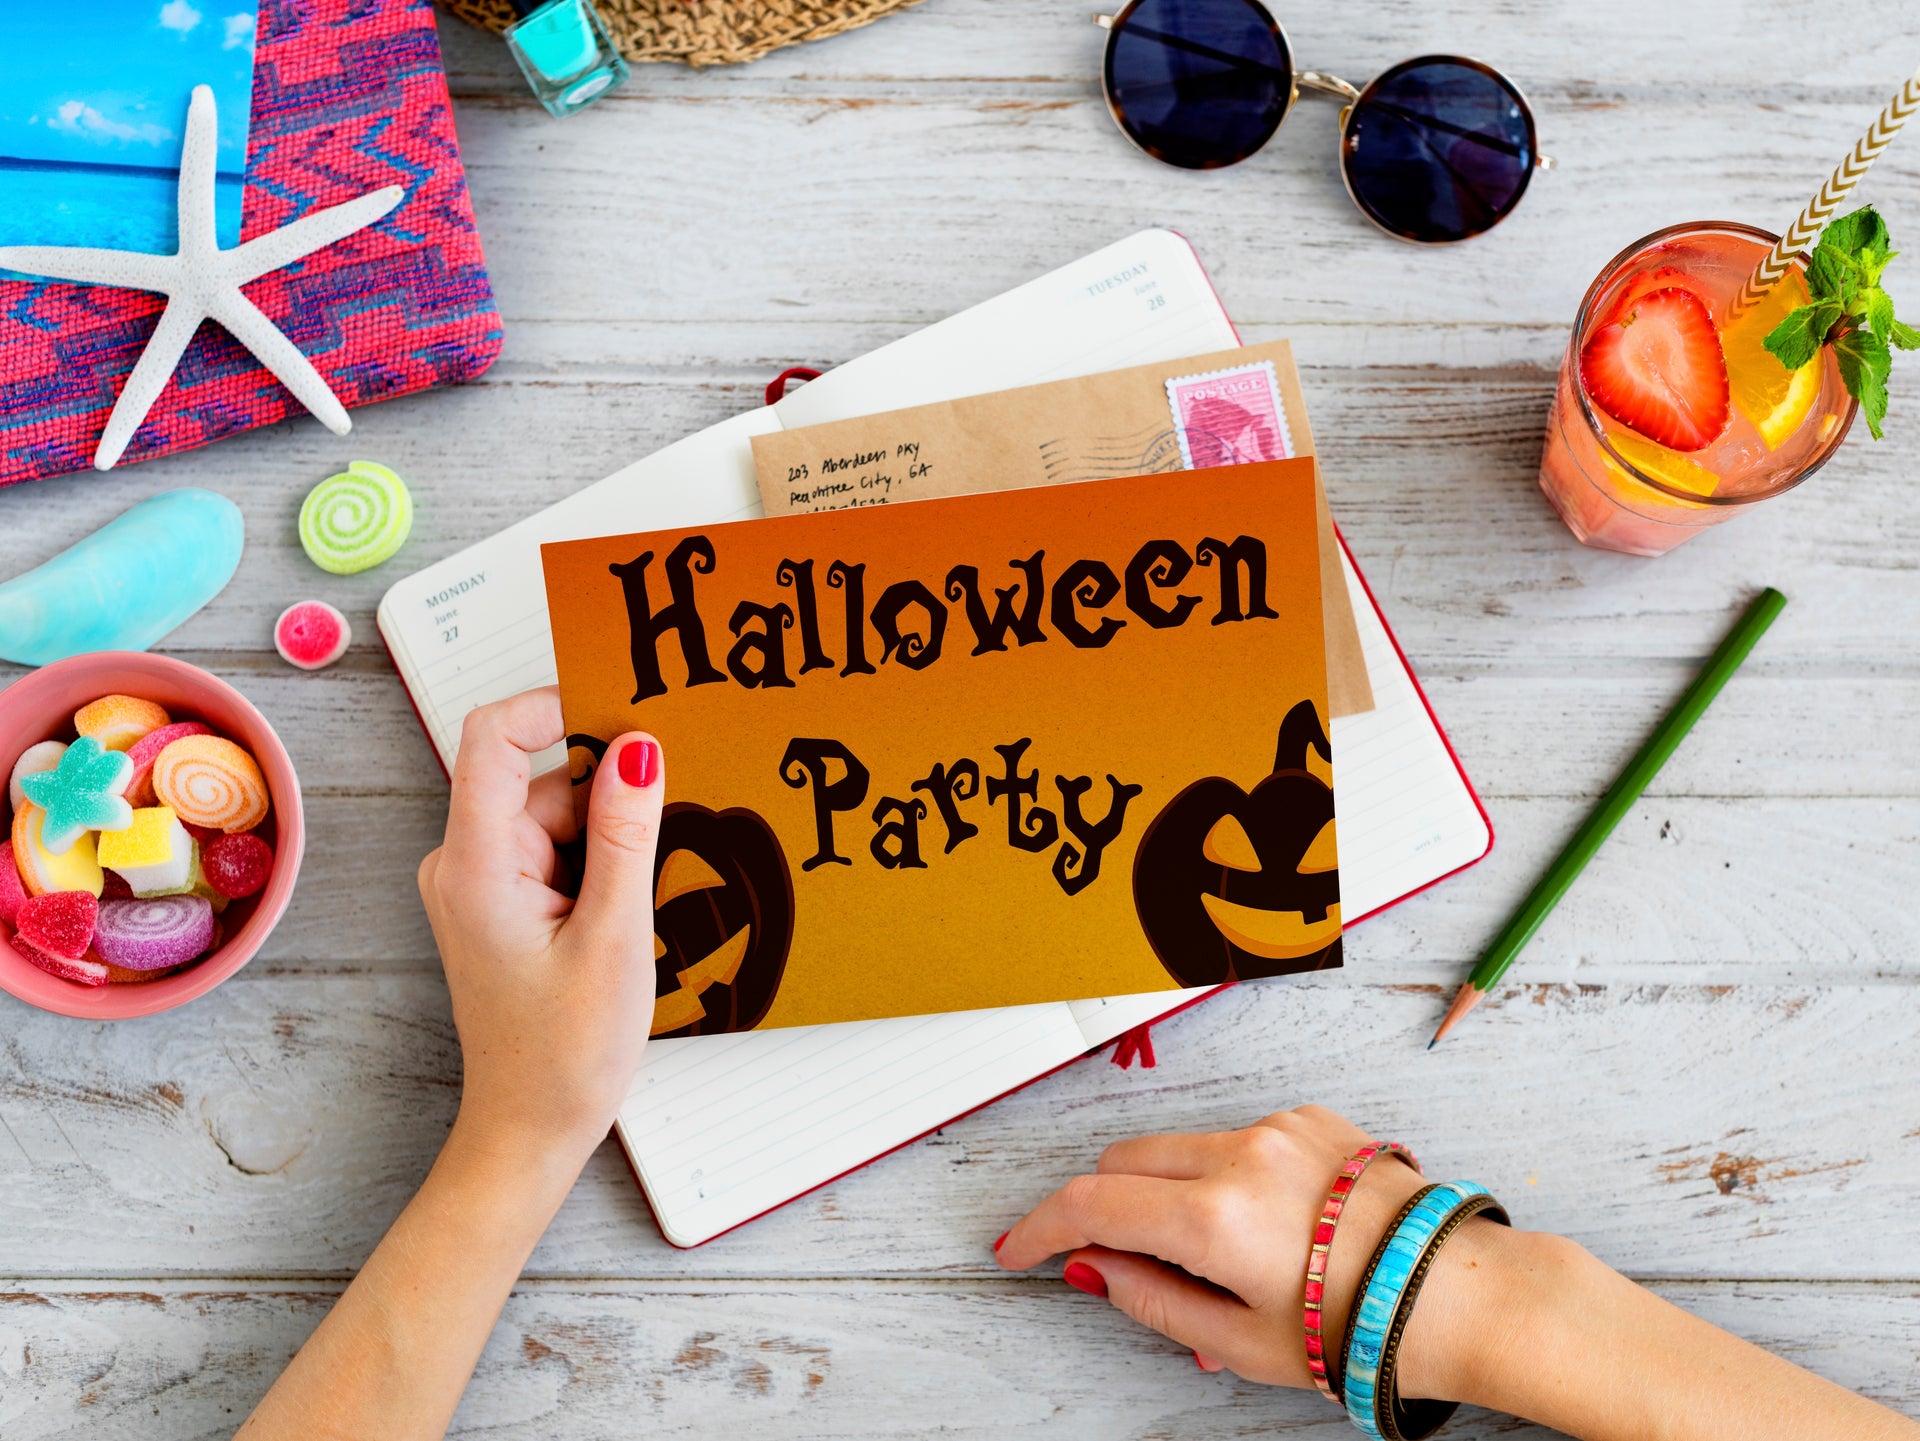 7 Creative Halloween Party Ideas for a Spooktacular Event